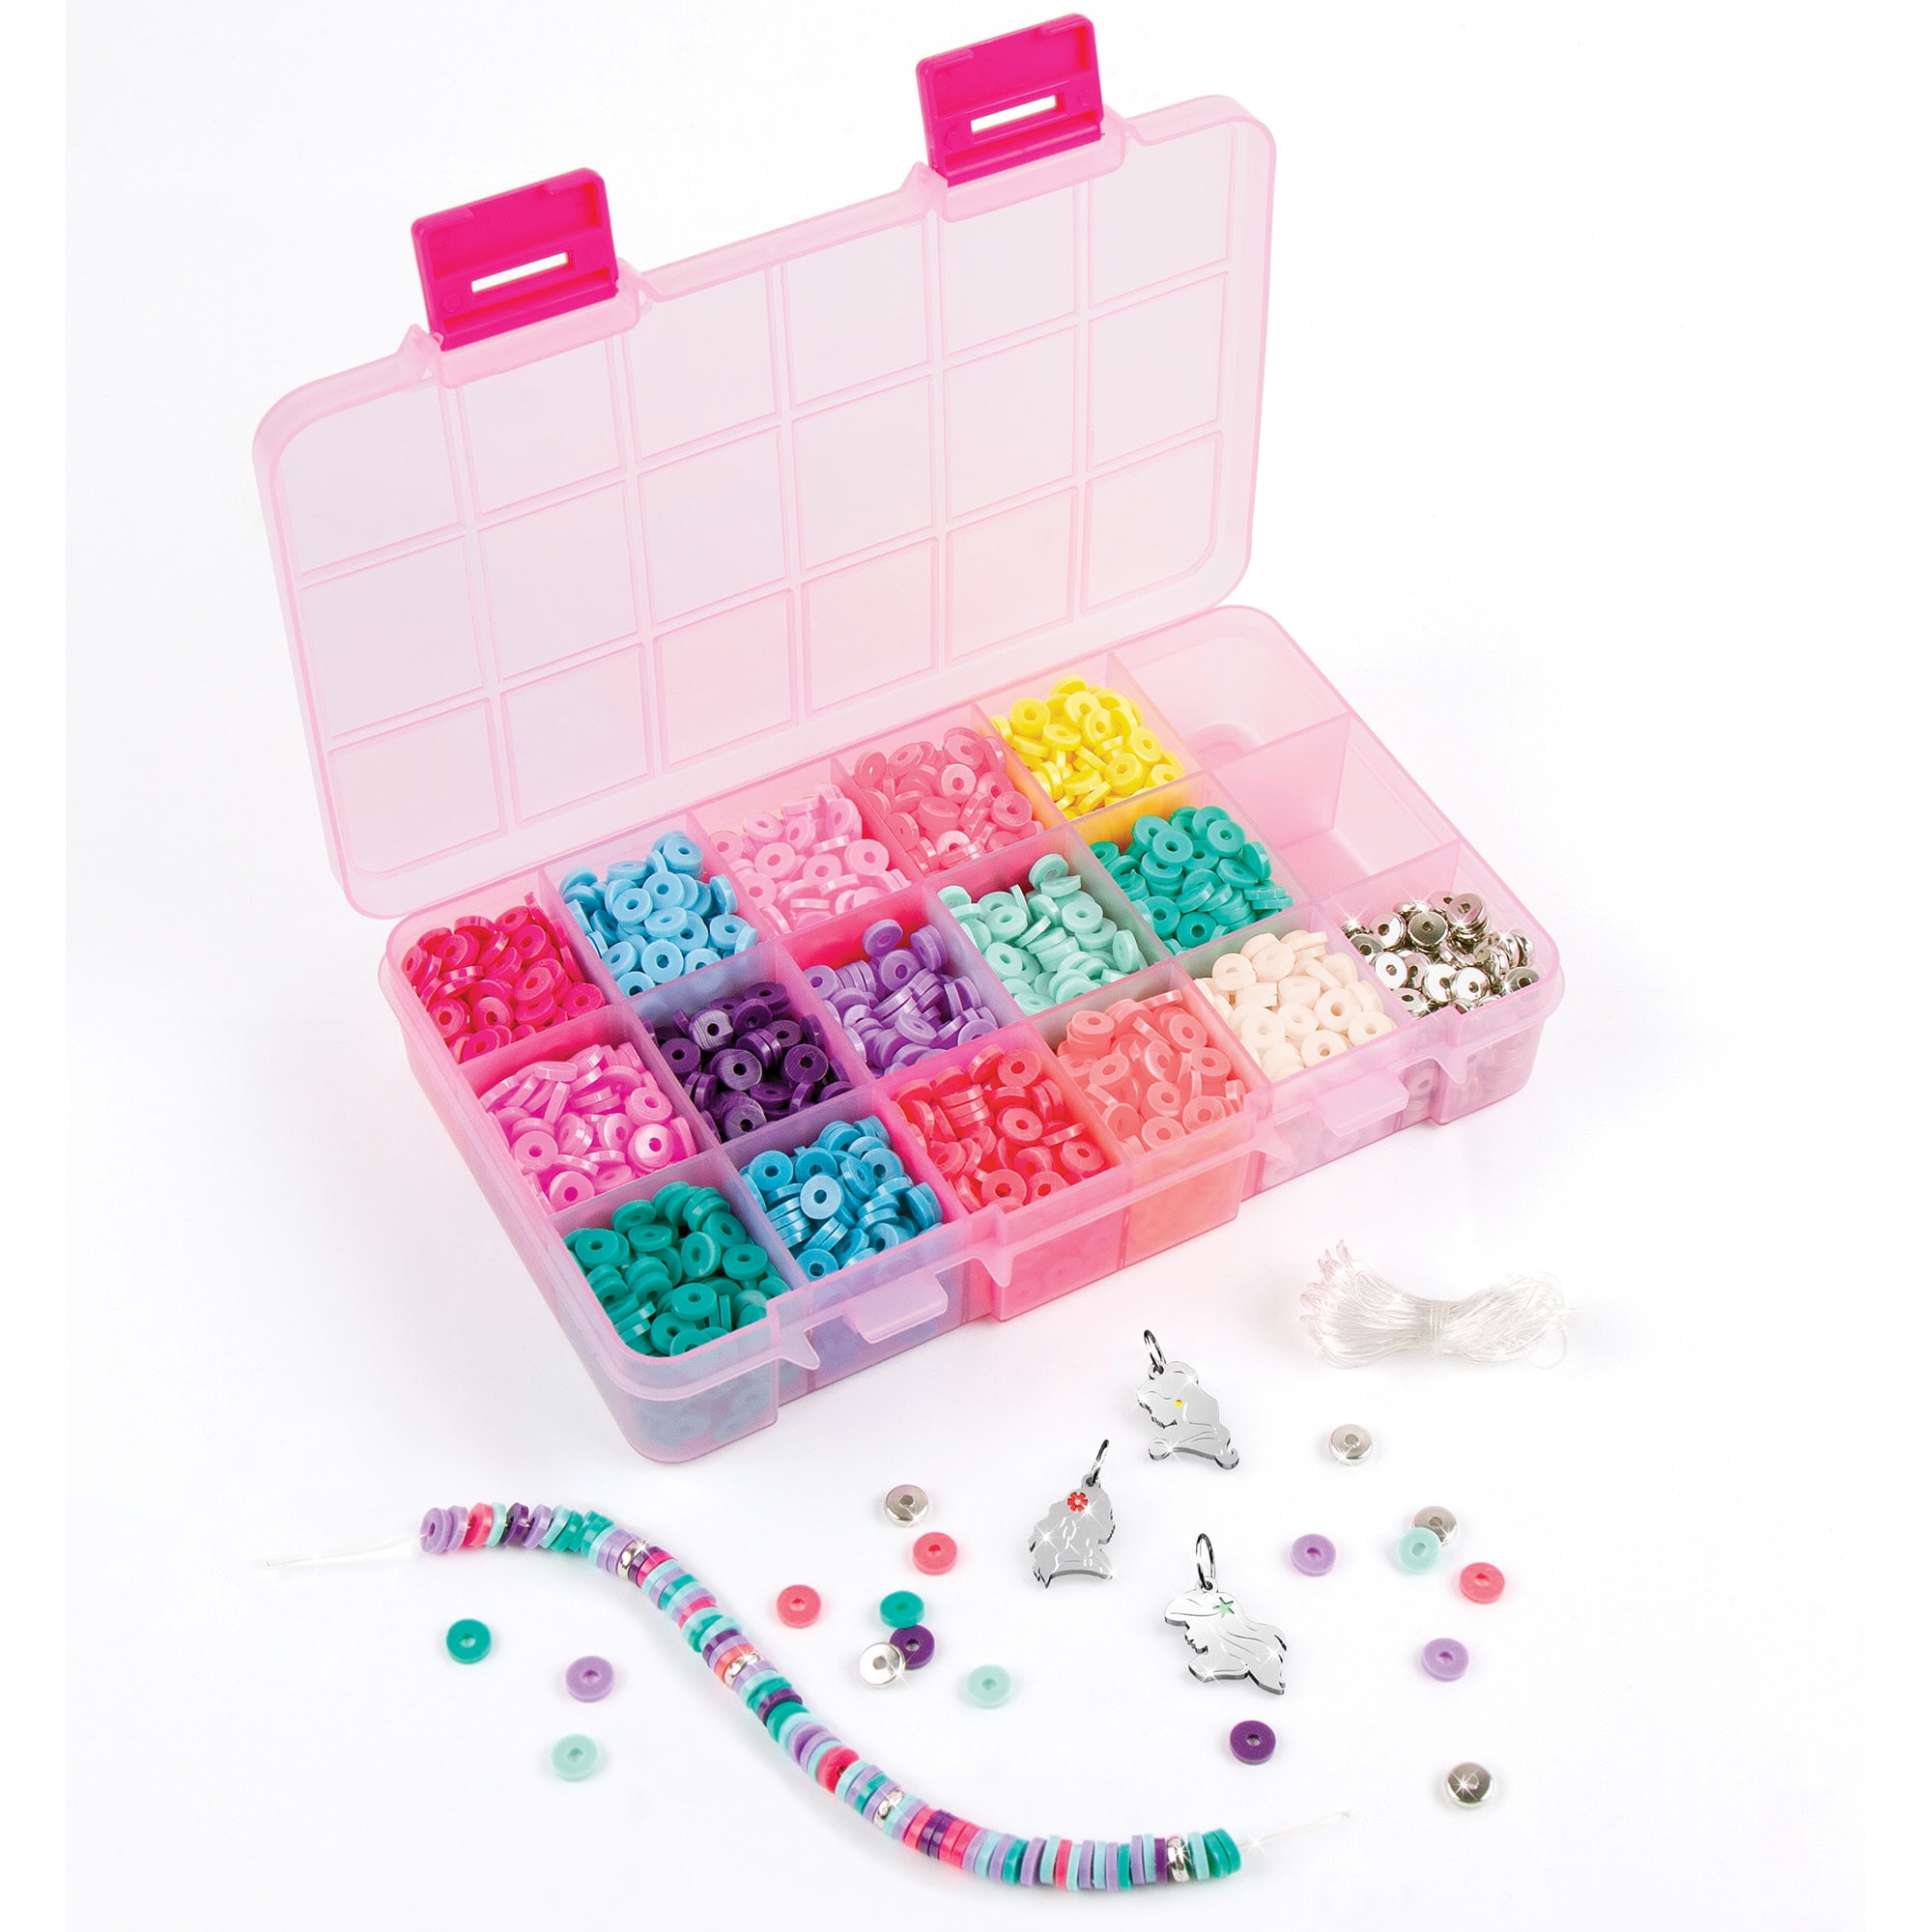 Disney Princess Royal Rounds: Heishi Beads Charm Set – Make It Real